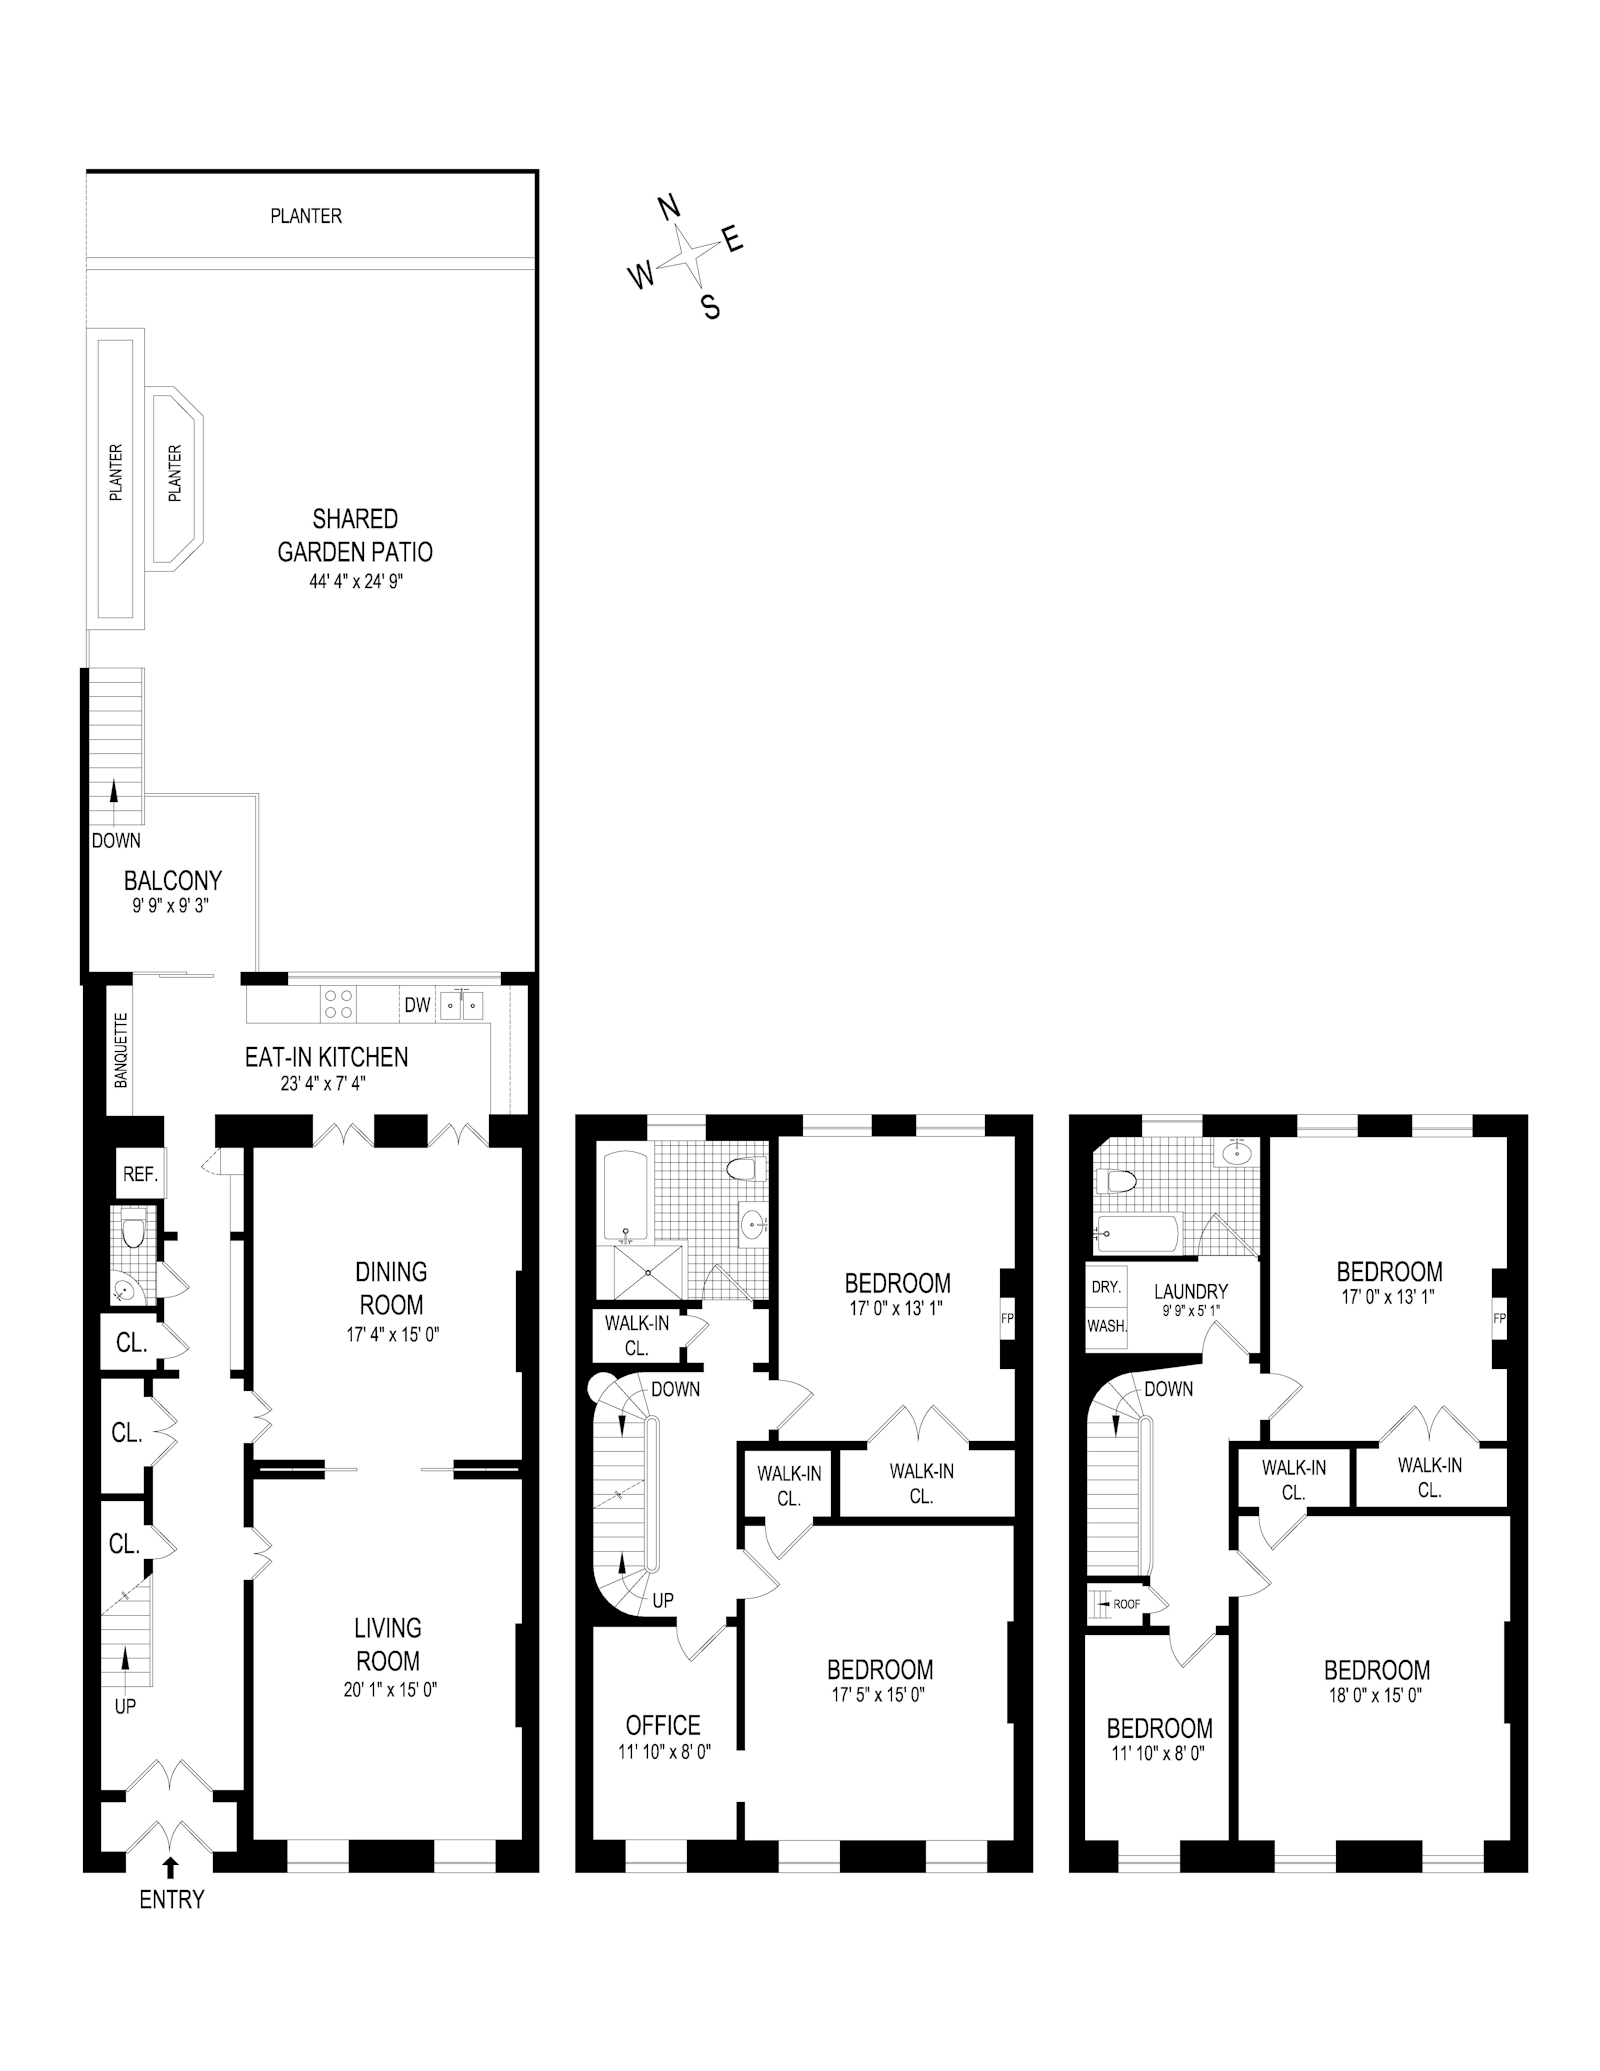 Floorplan for 219 Congress Street, 2